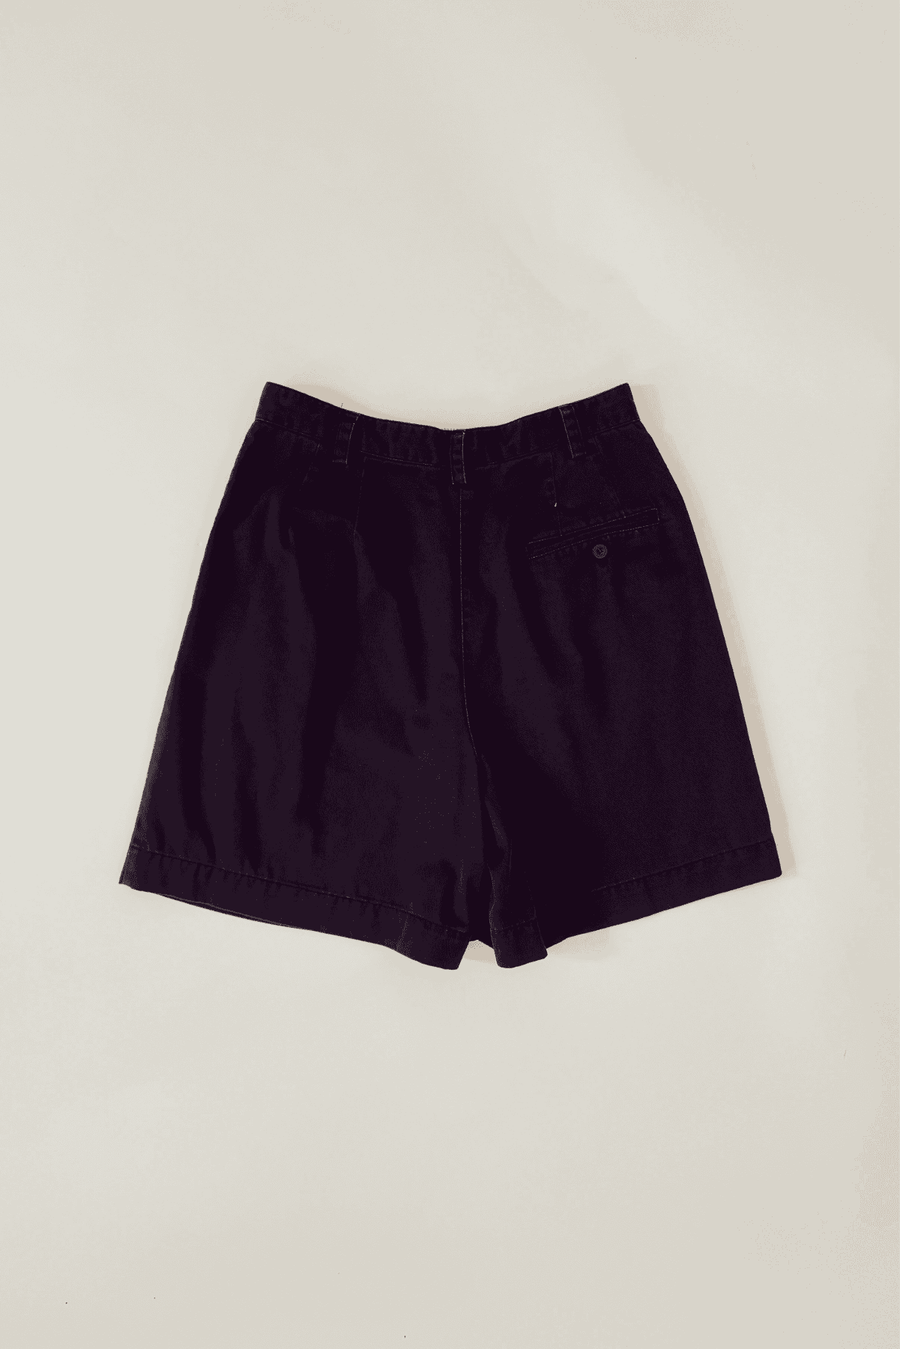 Early 2000s Vintage Liz Claiborne Black High Waist Shorts Size 4